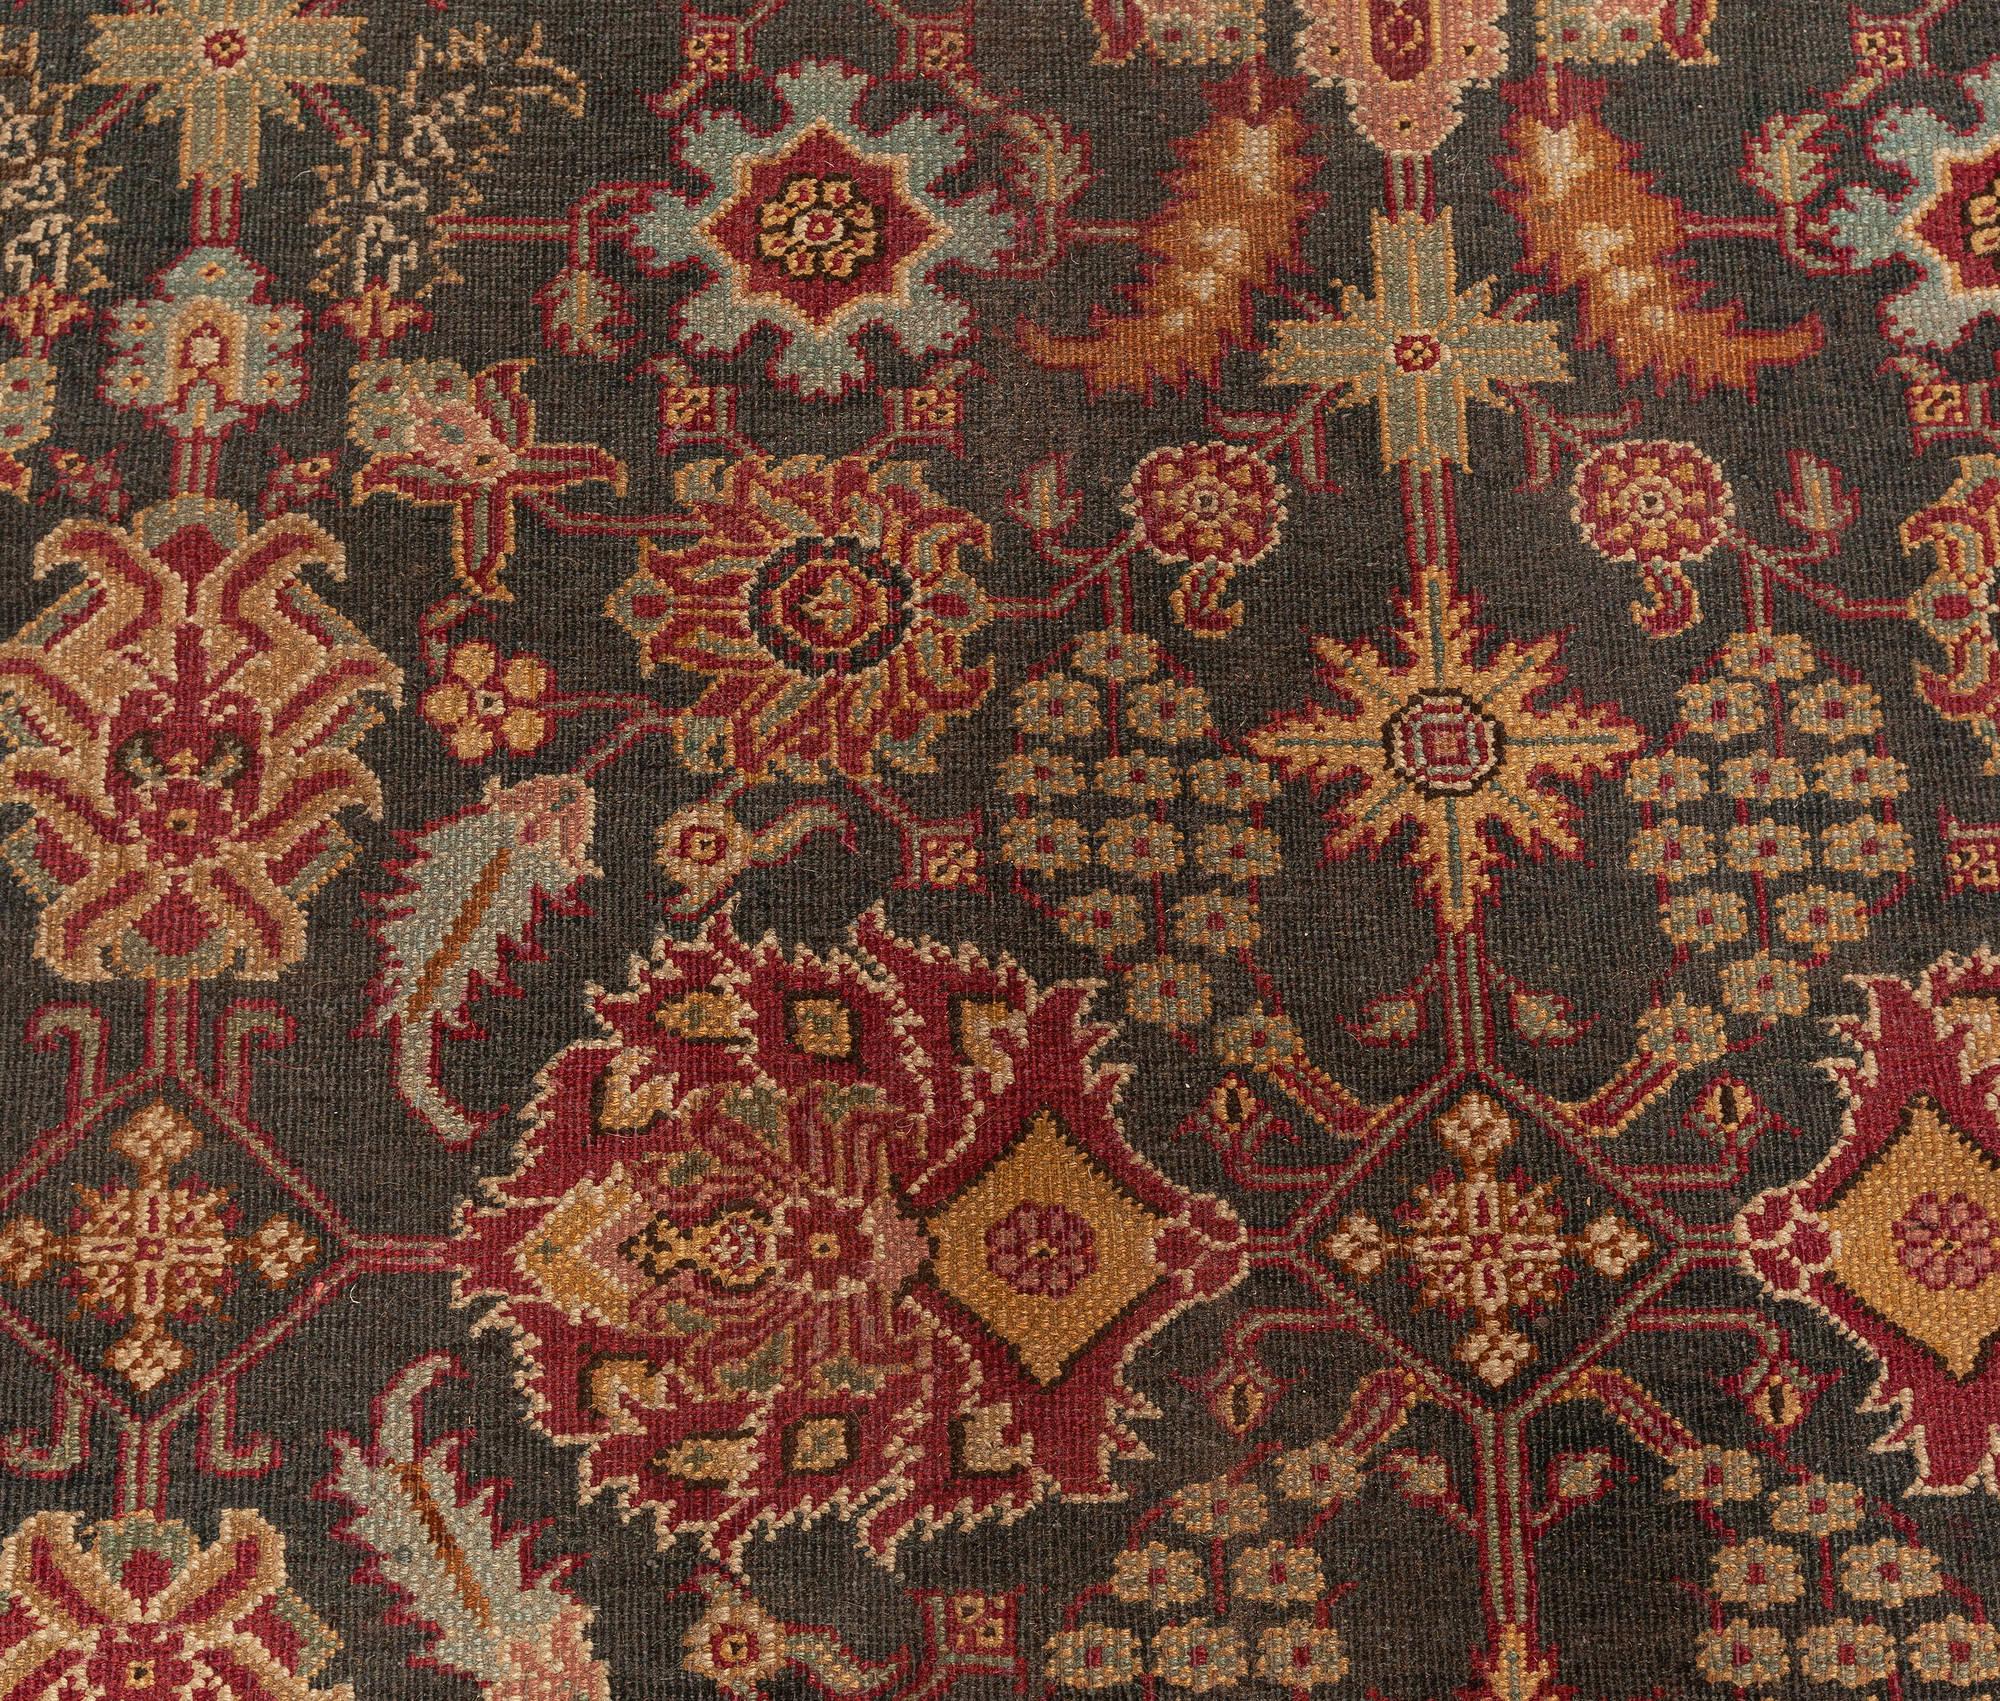 Antique Indian Amritsar handmade wool rug
Size: 10'10